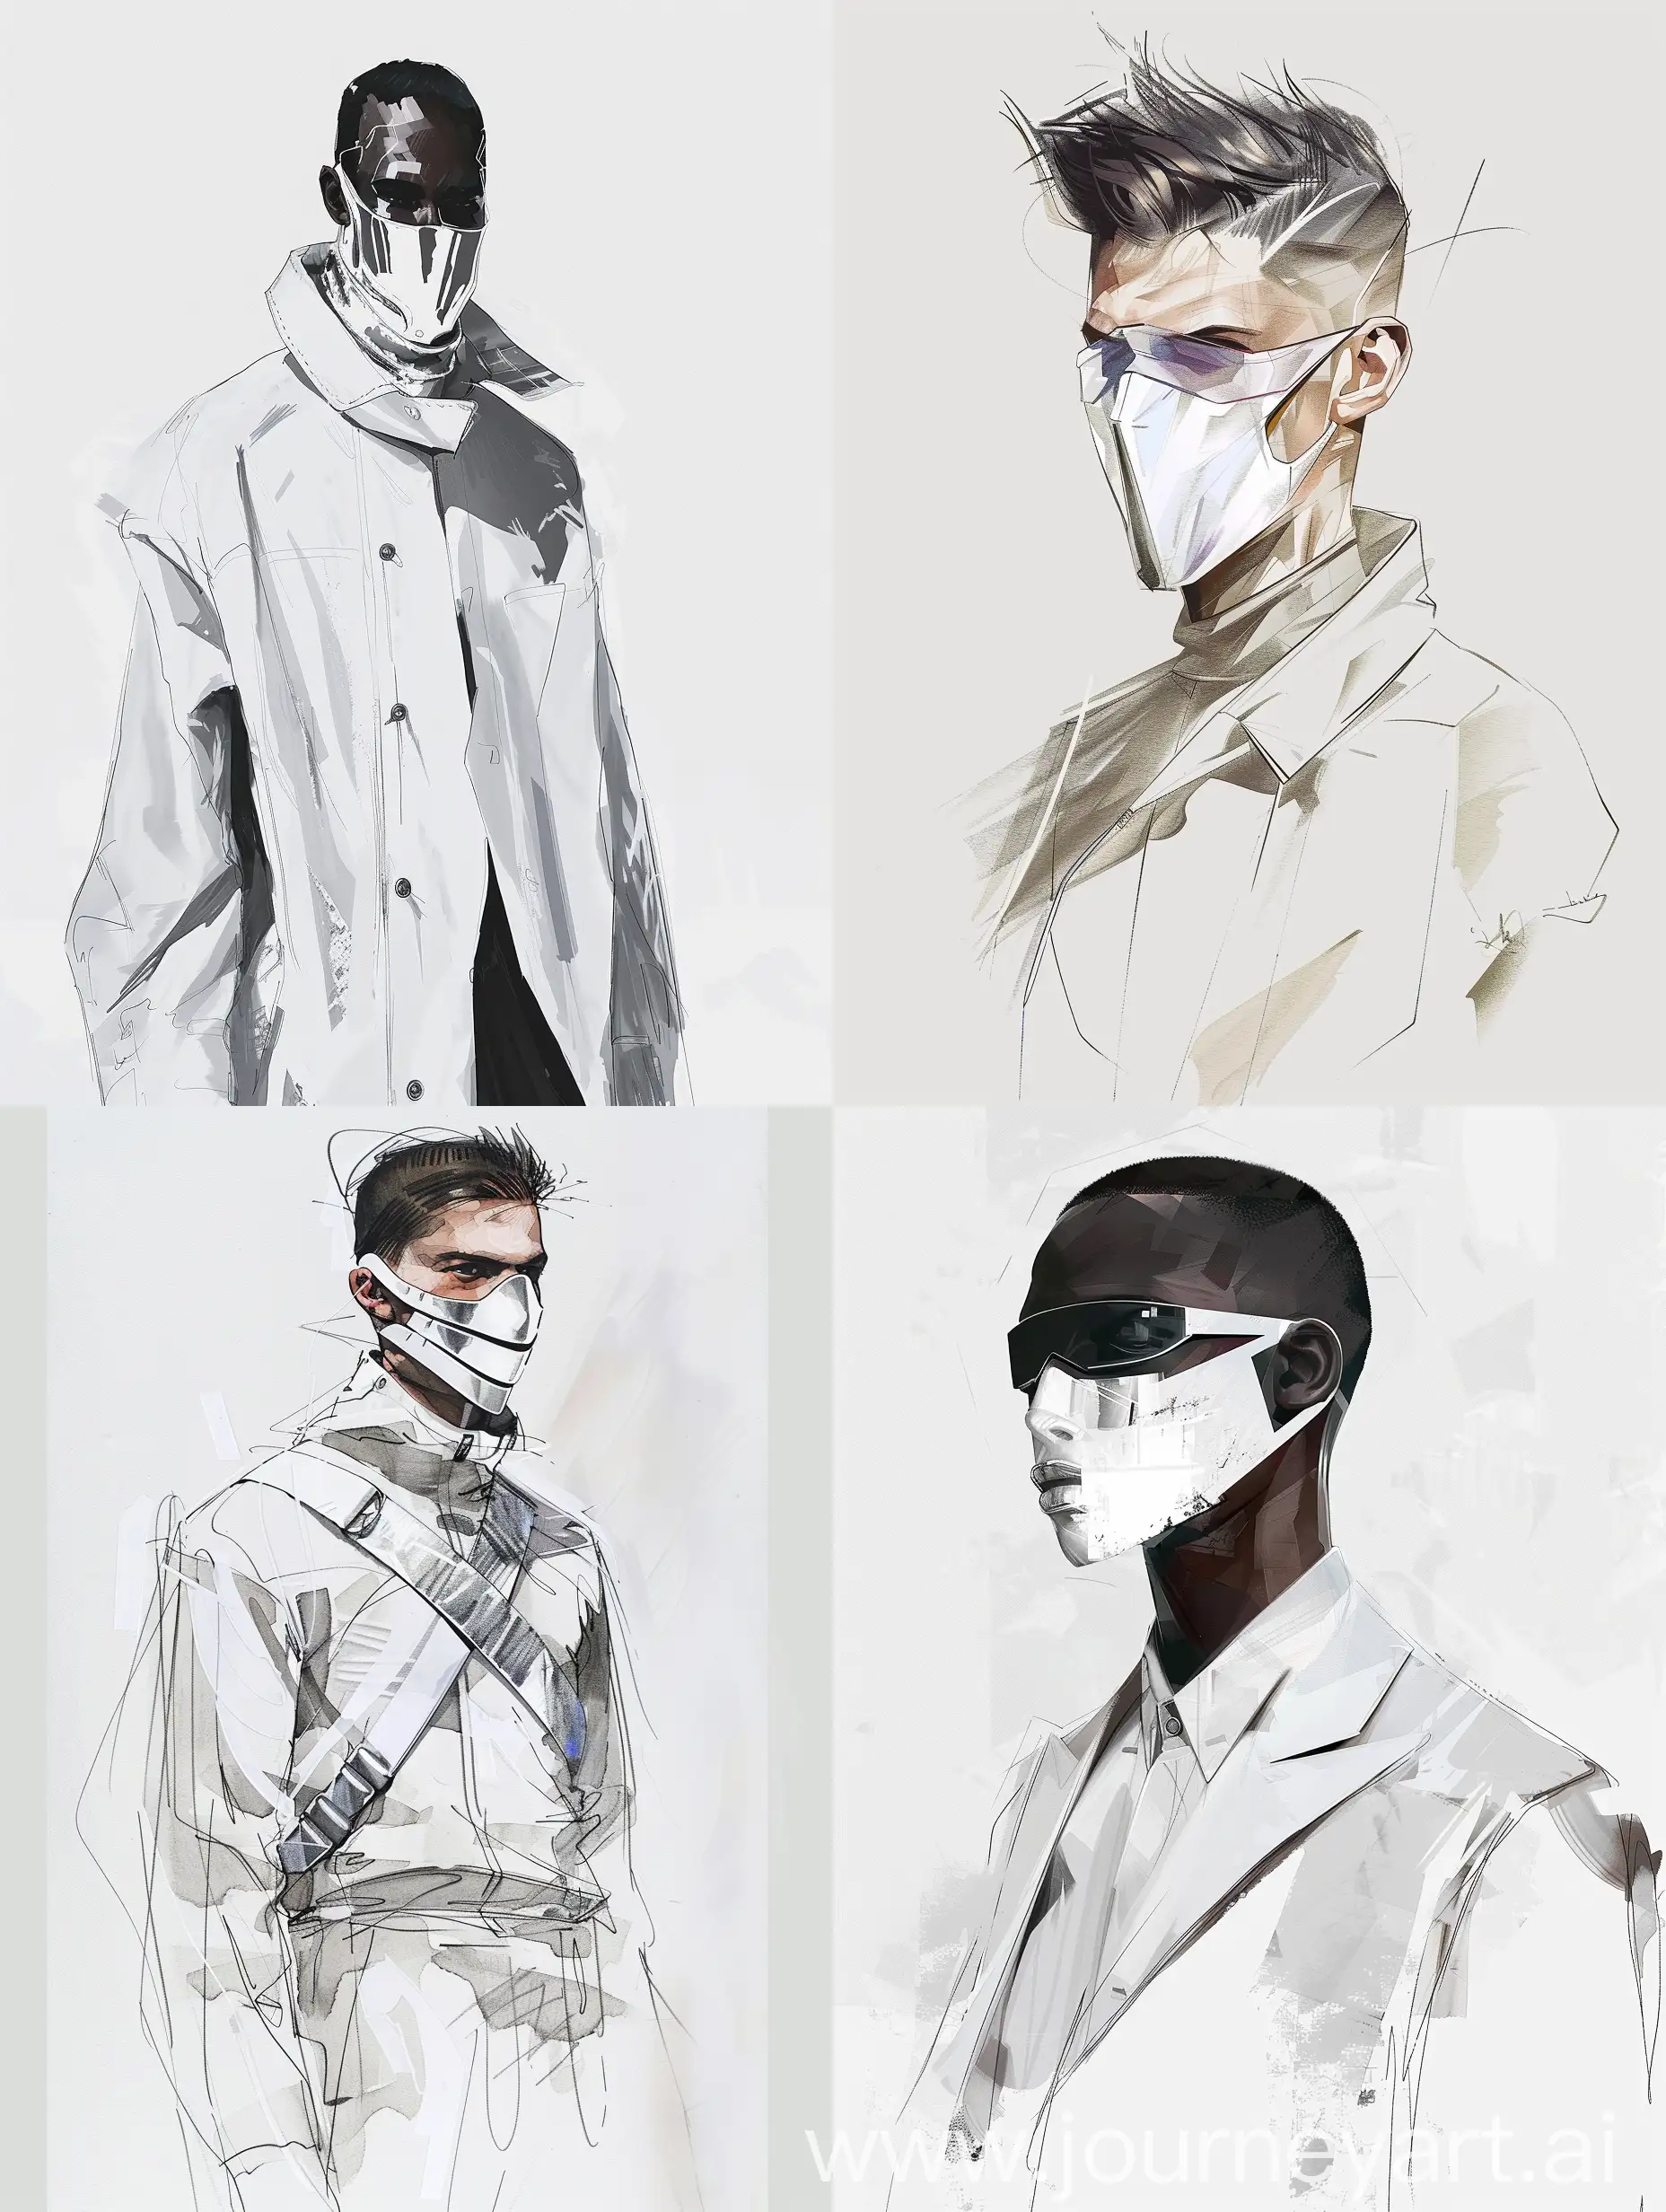 futuristic male high fashion, wear white metallic face mask runway sketches minimalist illustration

